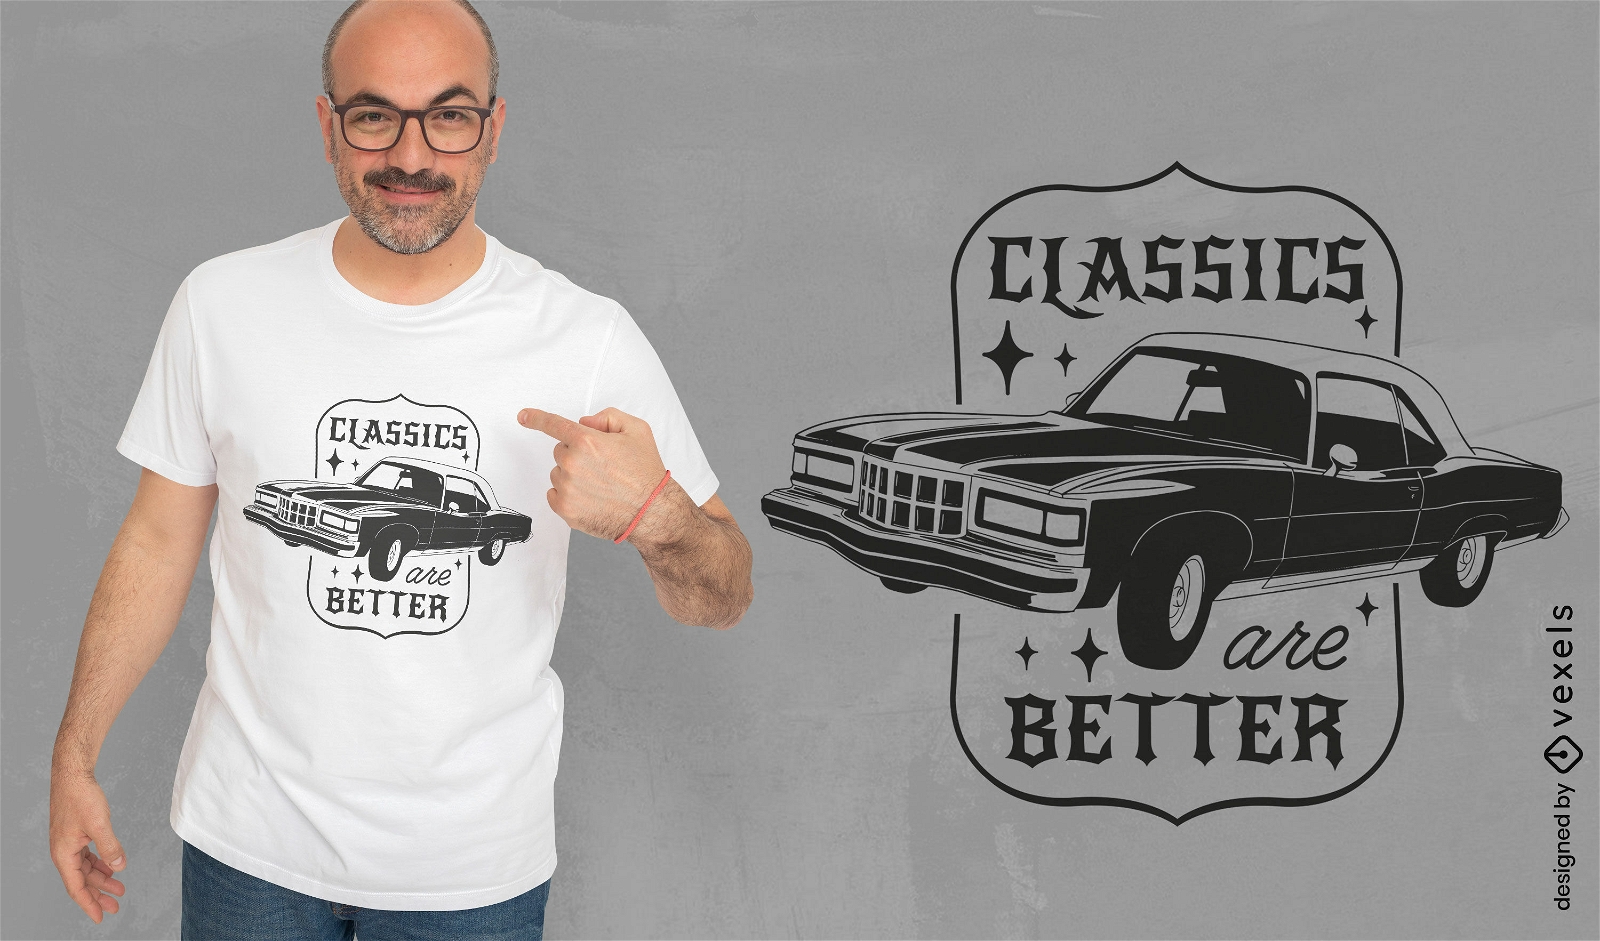 Classical car transport t-shirt design